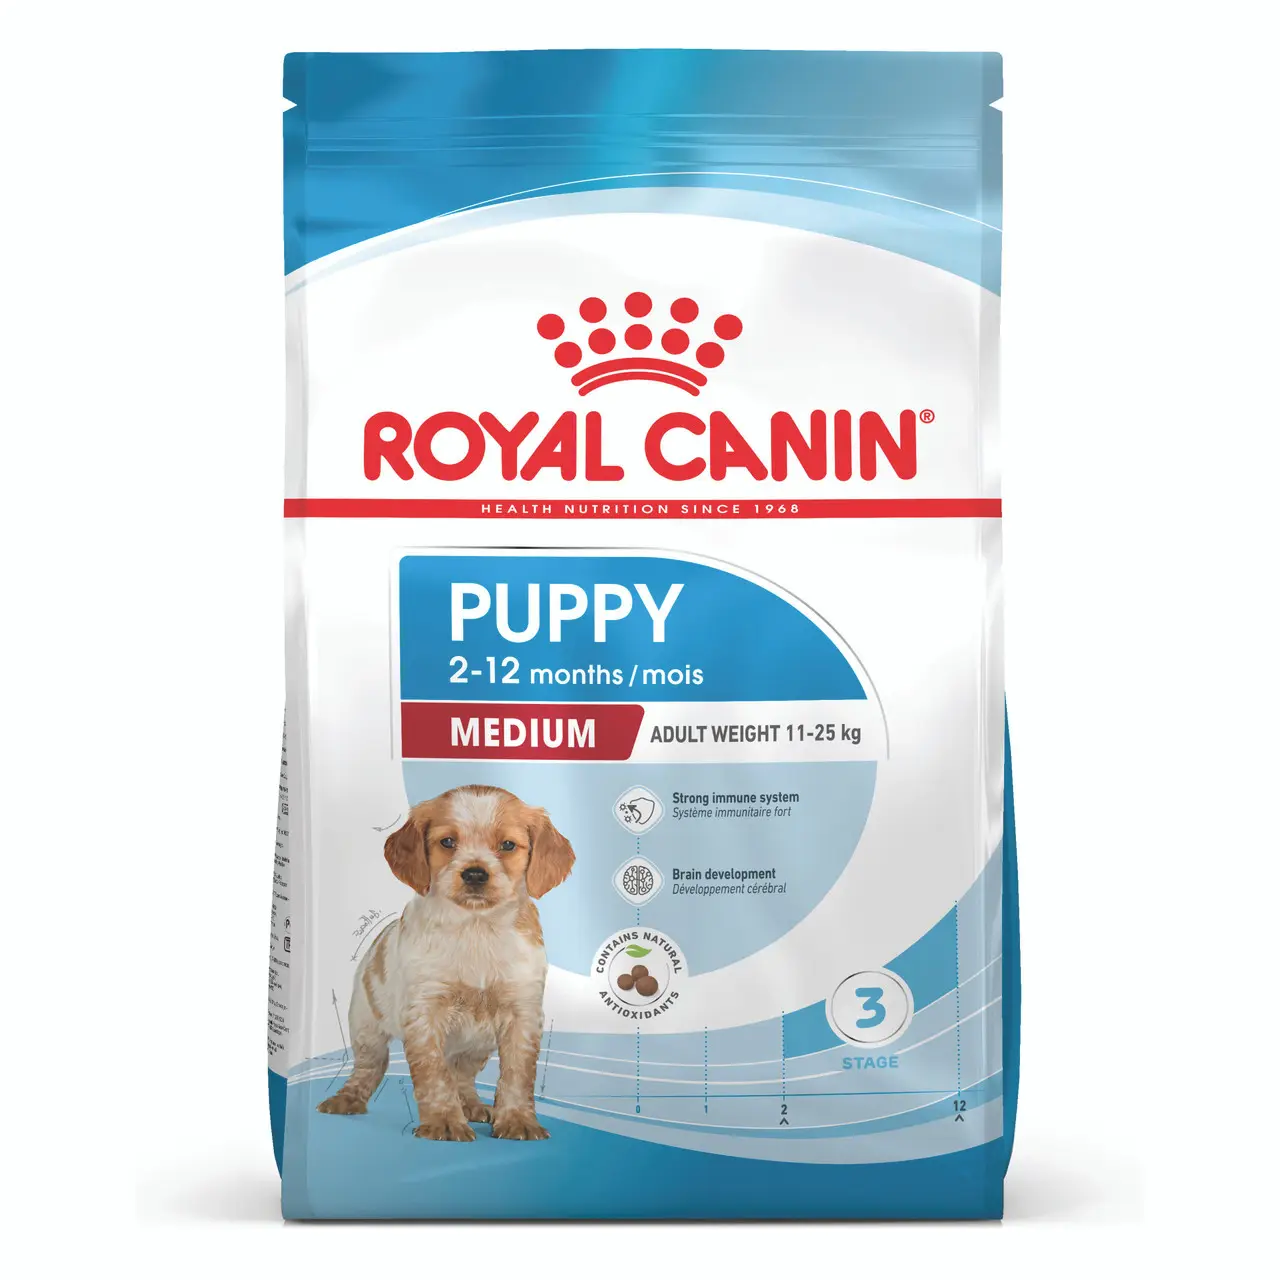 Заводская цена r-oyal canin, оптовая продажа, упаковка 20 кг, сухой корм для собак | Дешевый корм для собак R-oyal Canin